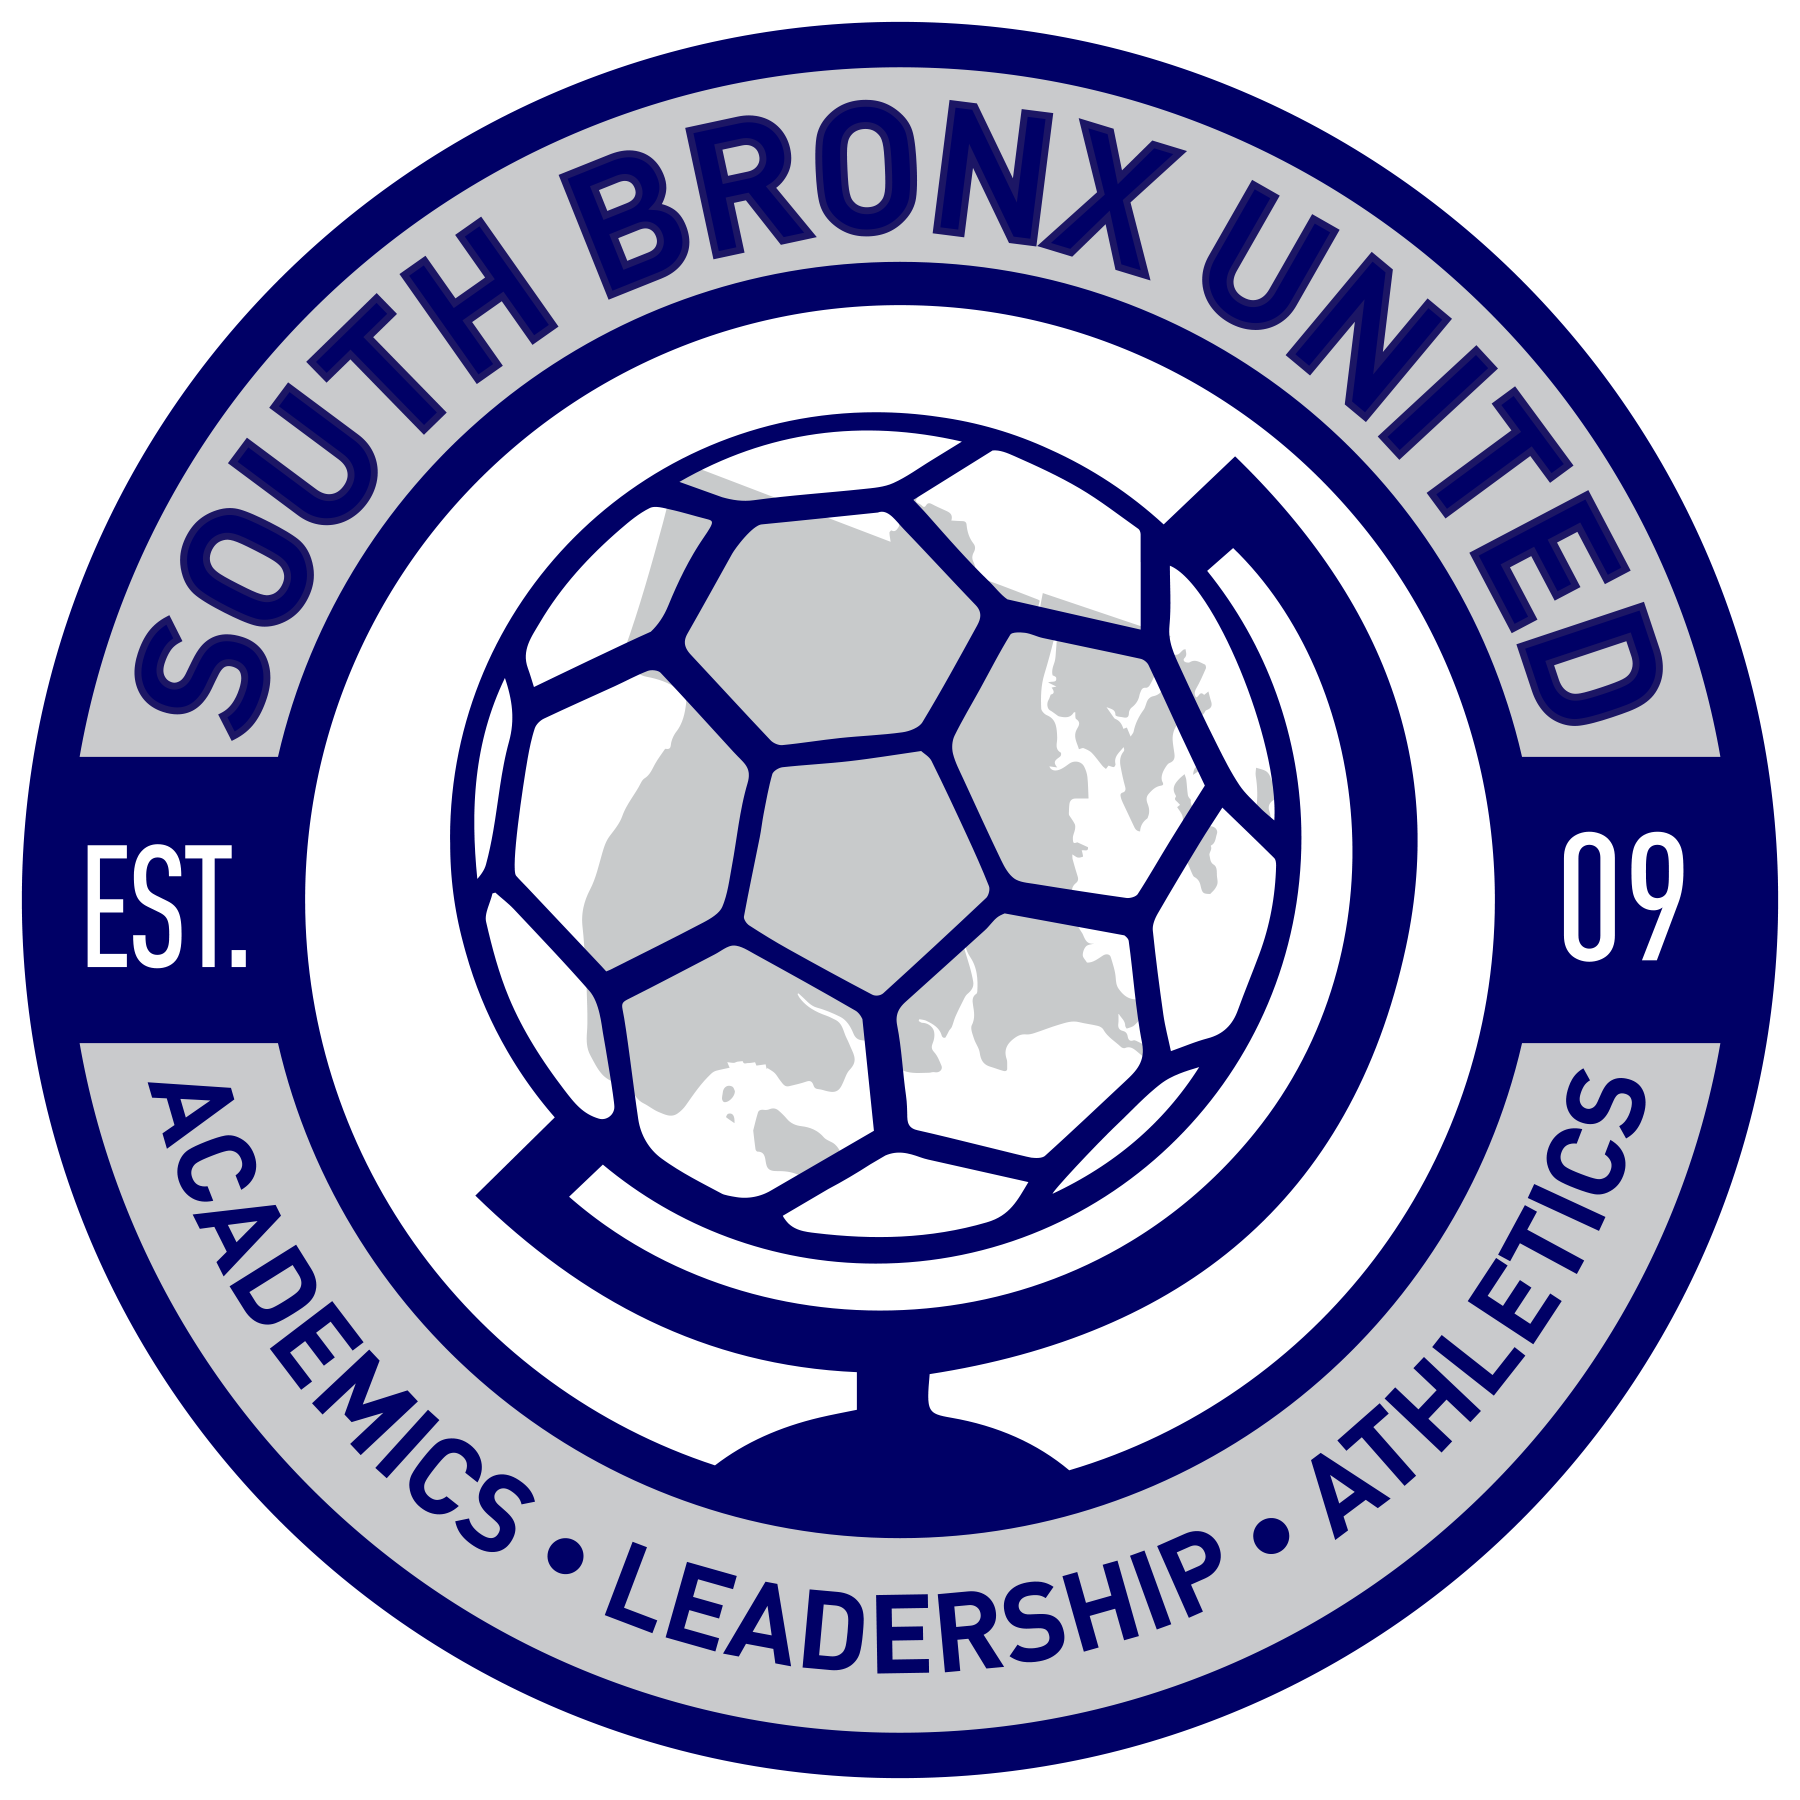 South Bronx United